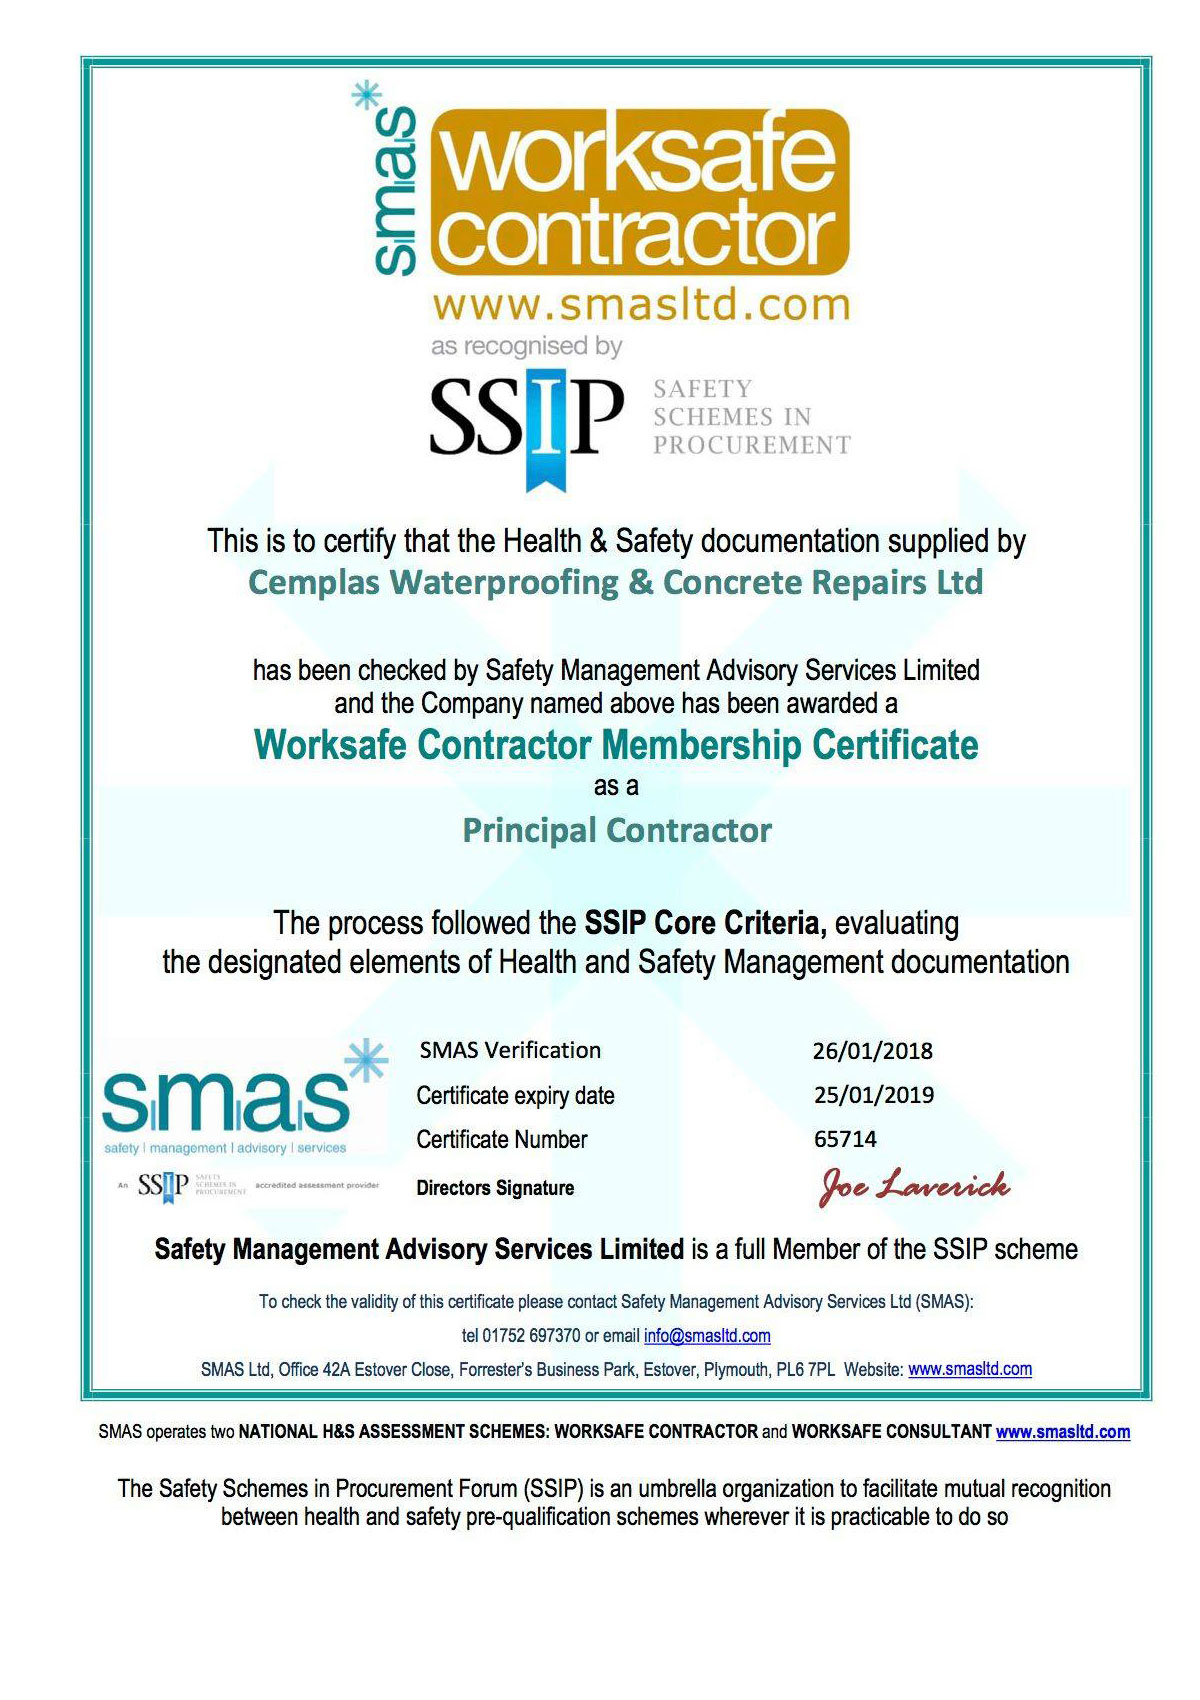 News - Renewed SMAS Accreditation